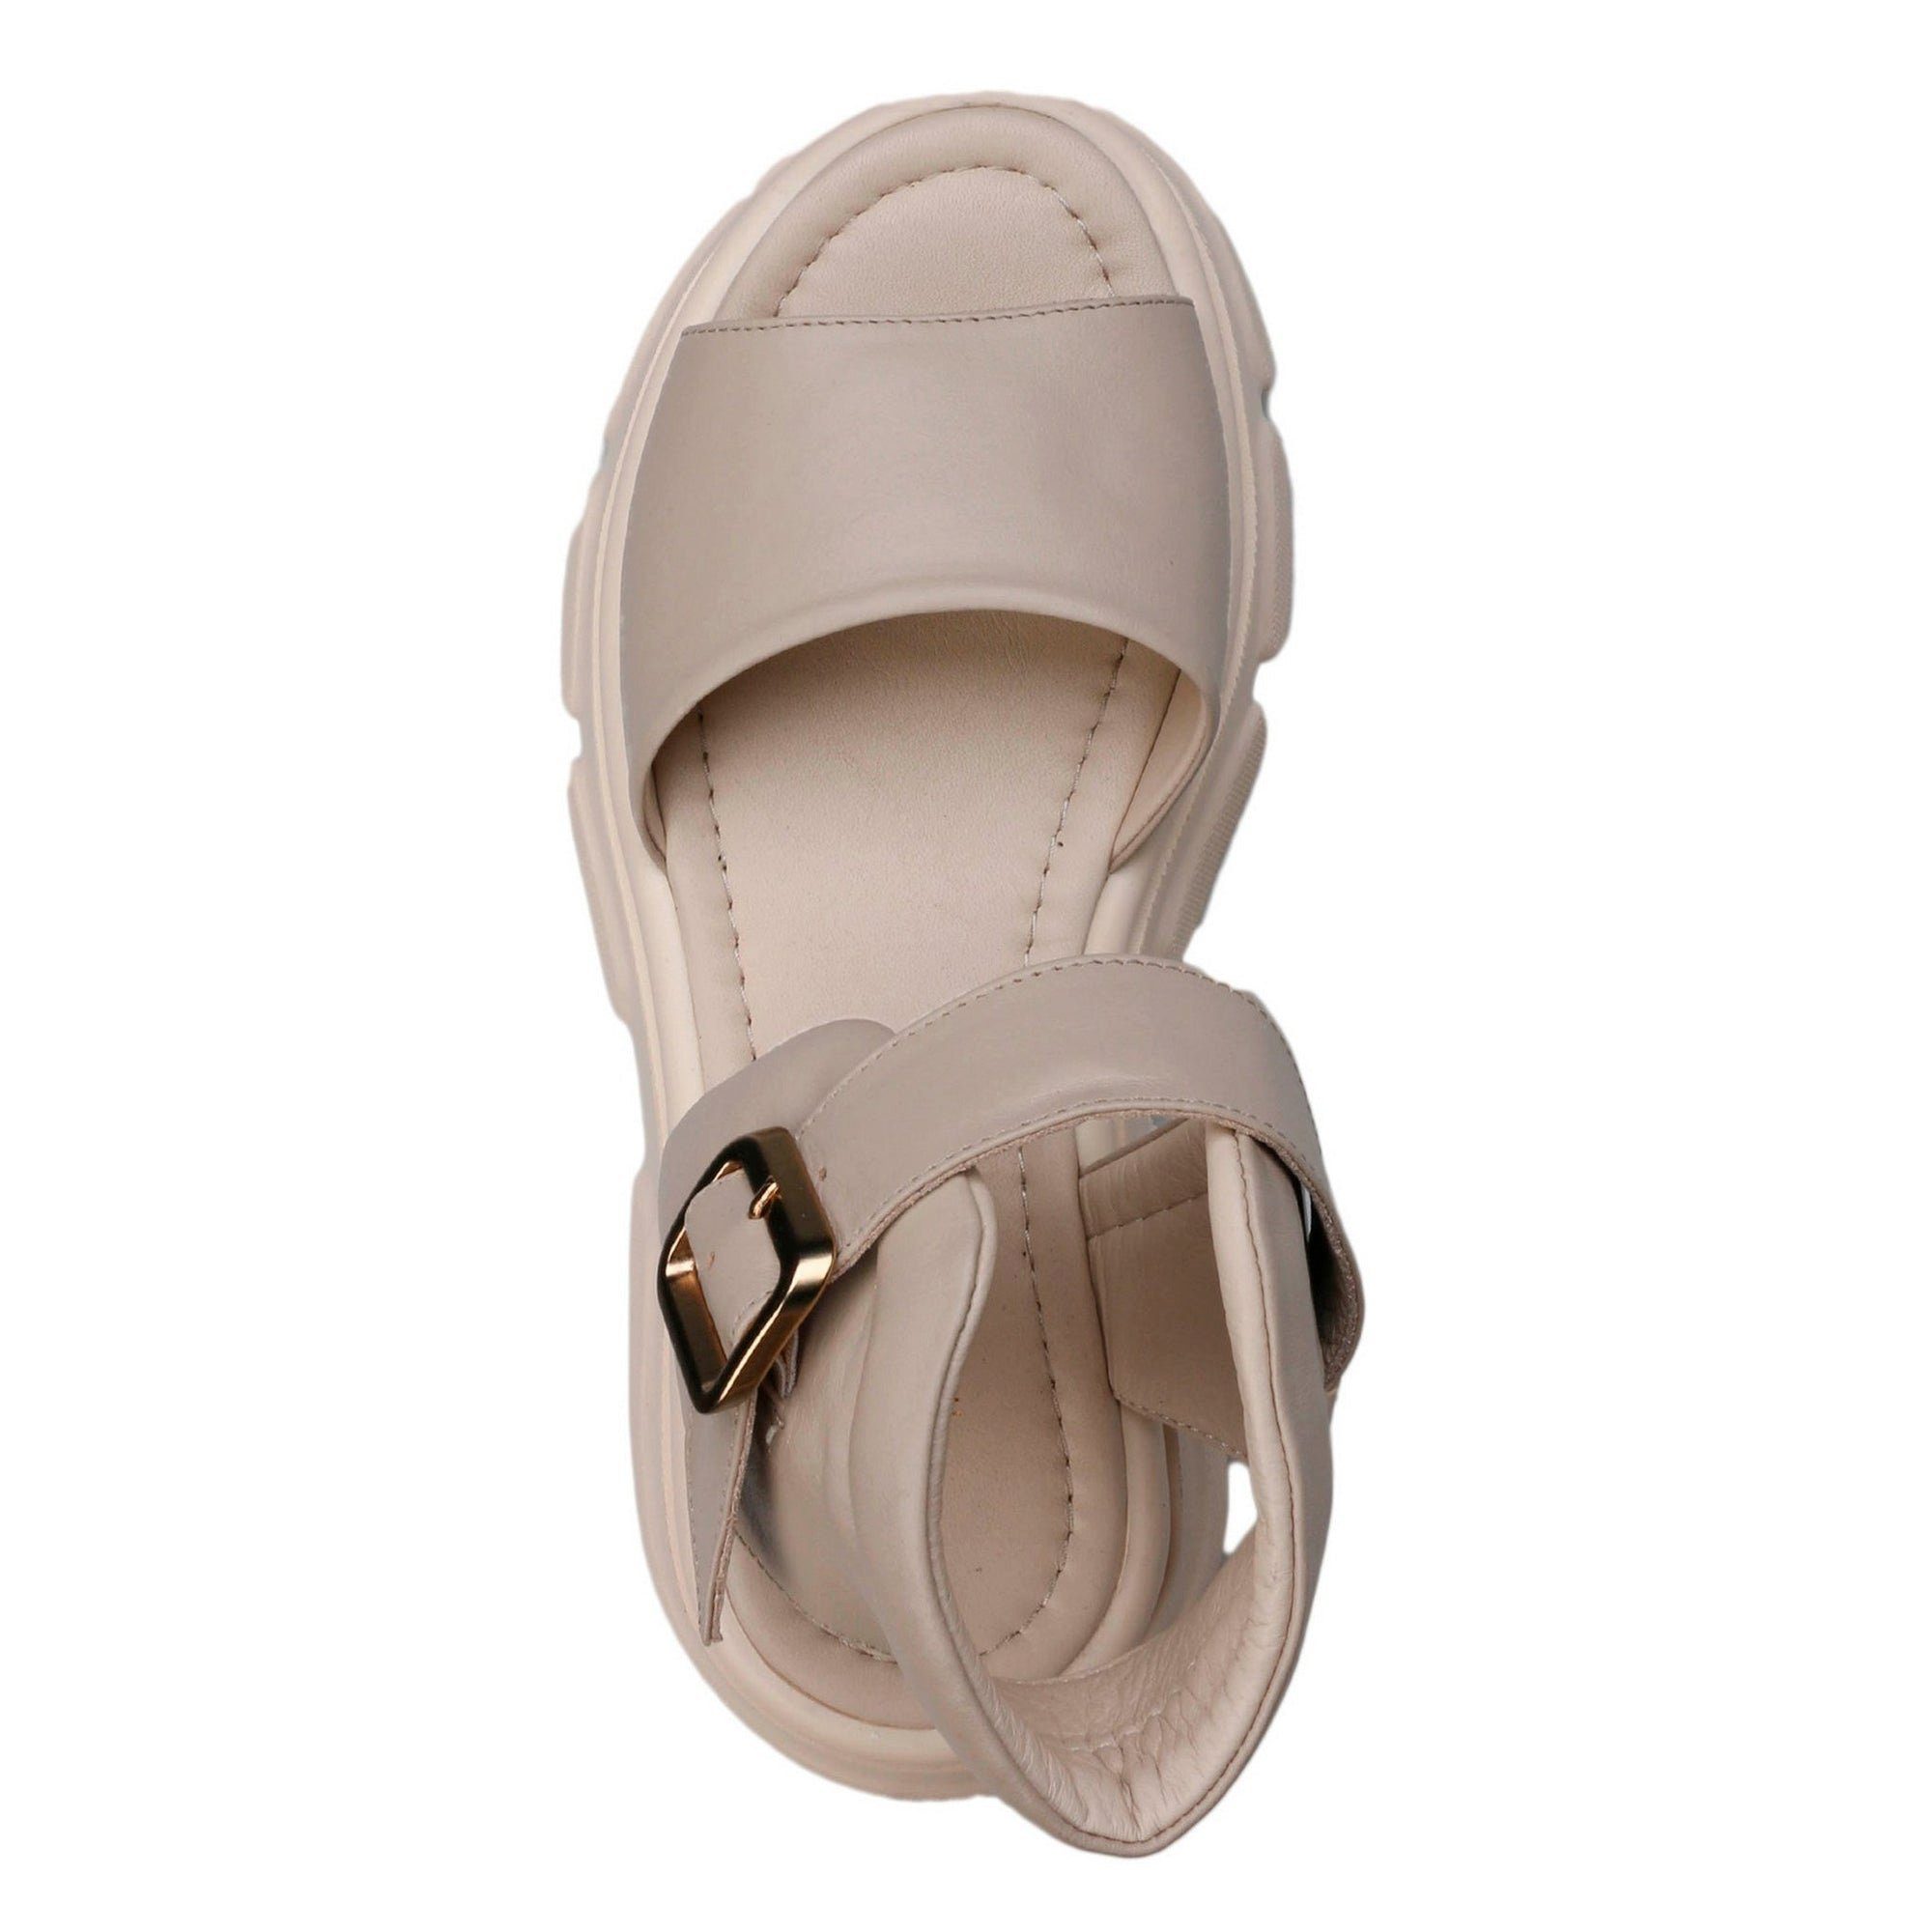 La Ballerina Trend Sandalen Riemchen beige Leder Schuhe Plateau Schnalle Profilsohle Bequeme mit Damen Echtleder Sandale Sandaletten mit